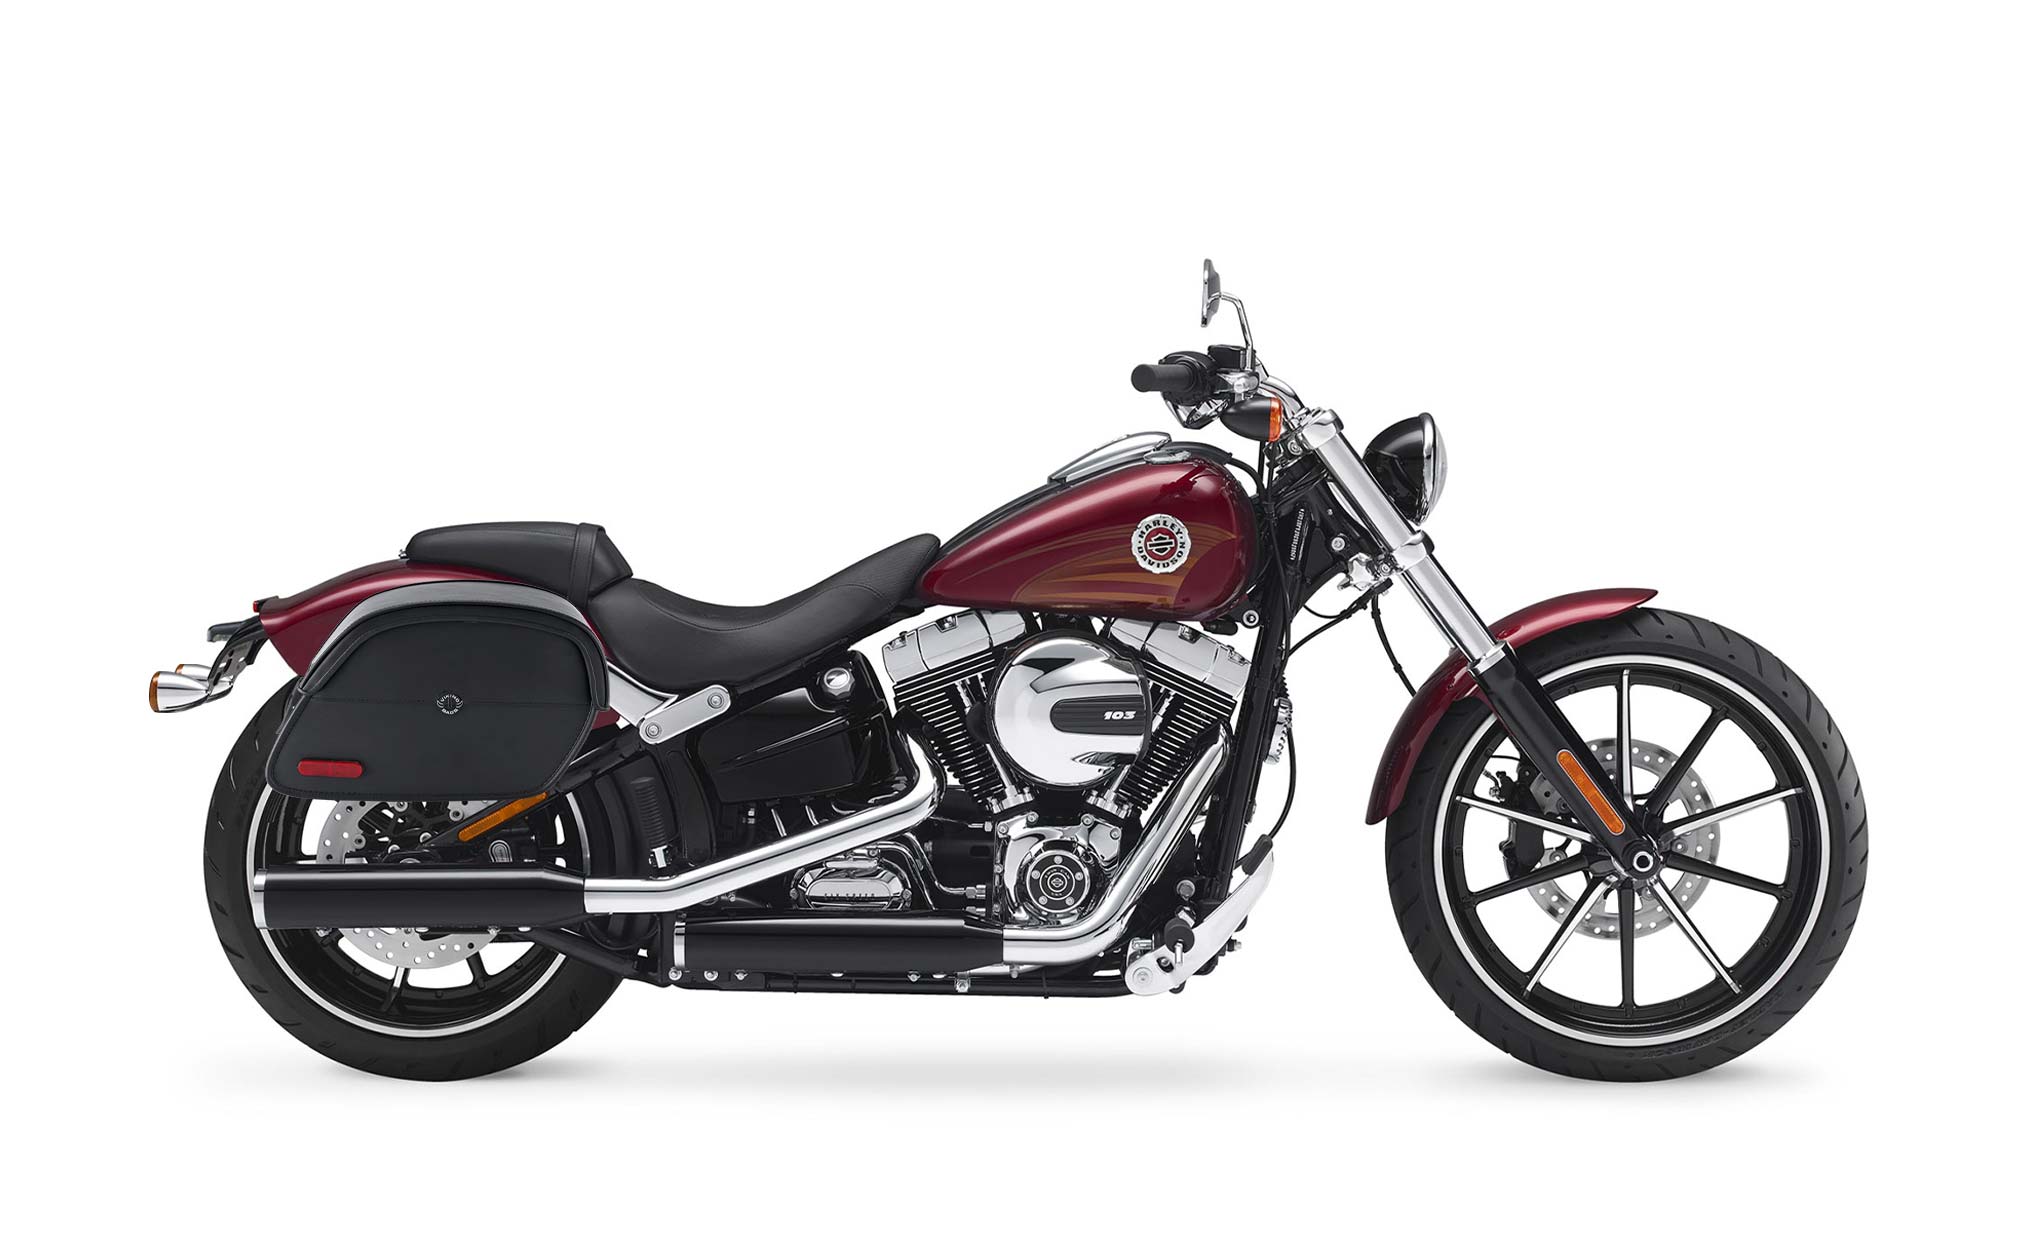 Viking California Large Leather Motorcycle Saddlebags For Harley Davidson Softail Breakout Fxsb on Bike Photo @expand